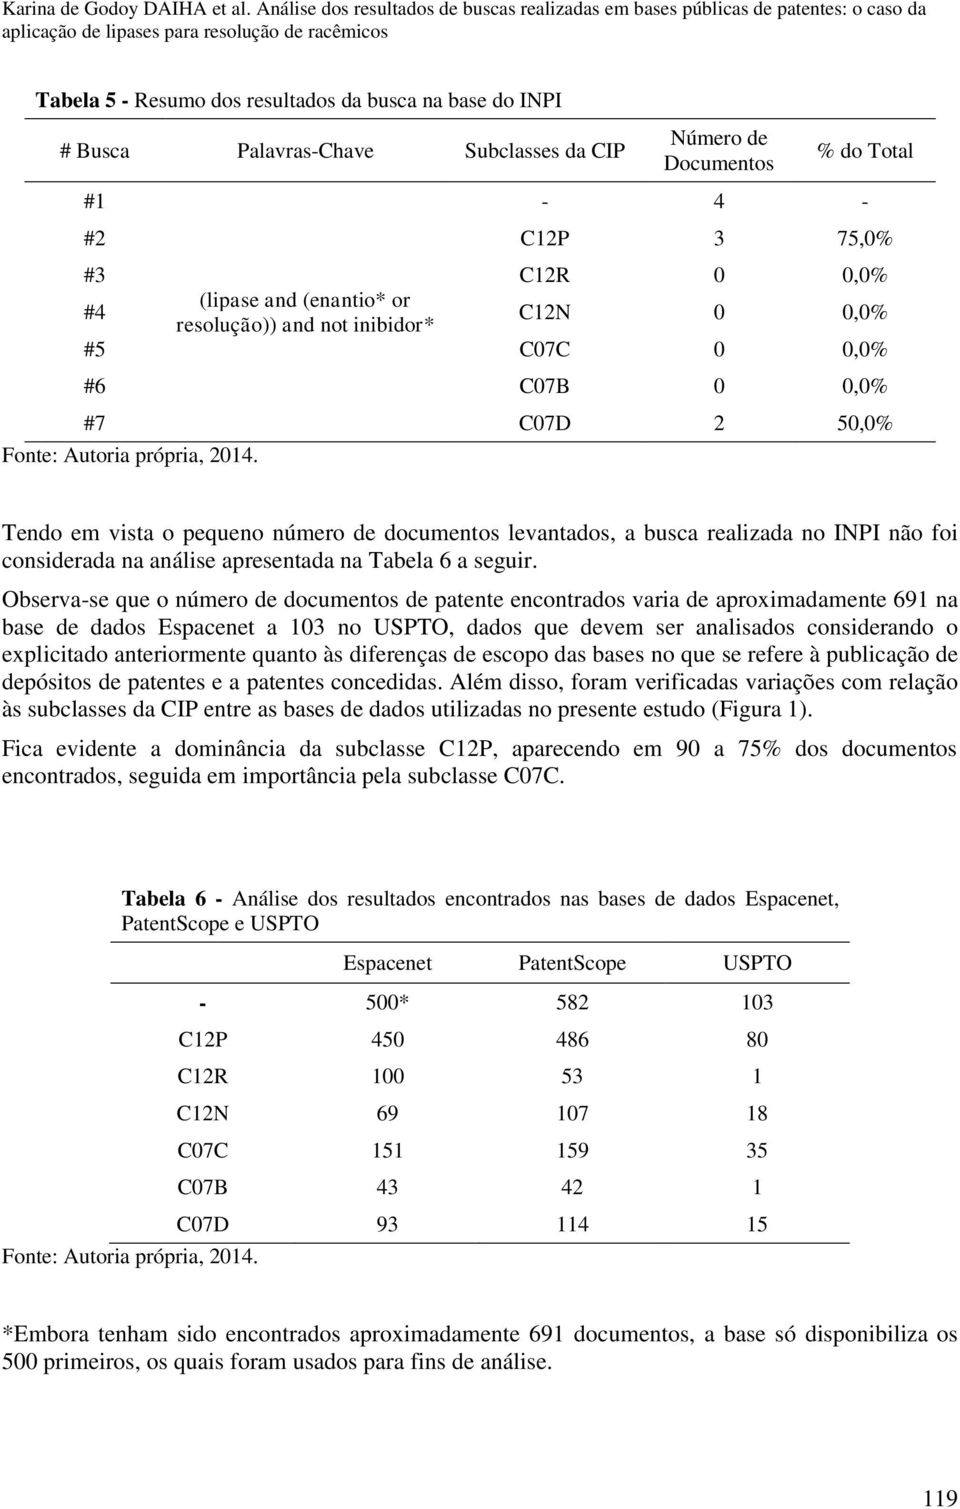 Palavras-Chave Subclasses da CIP #1-4 - #2 C12P 3 75,0% #3 C12R 0 0,0% #4 (lipase and (enantio* or resolução)) and not inibidor* C12N 0 0,0% #5 C07C 0 0,0% #6 C07B 0 0,0% #7 C07D 2 50,0% Tendo em